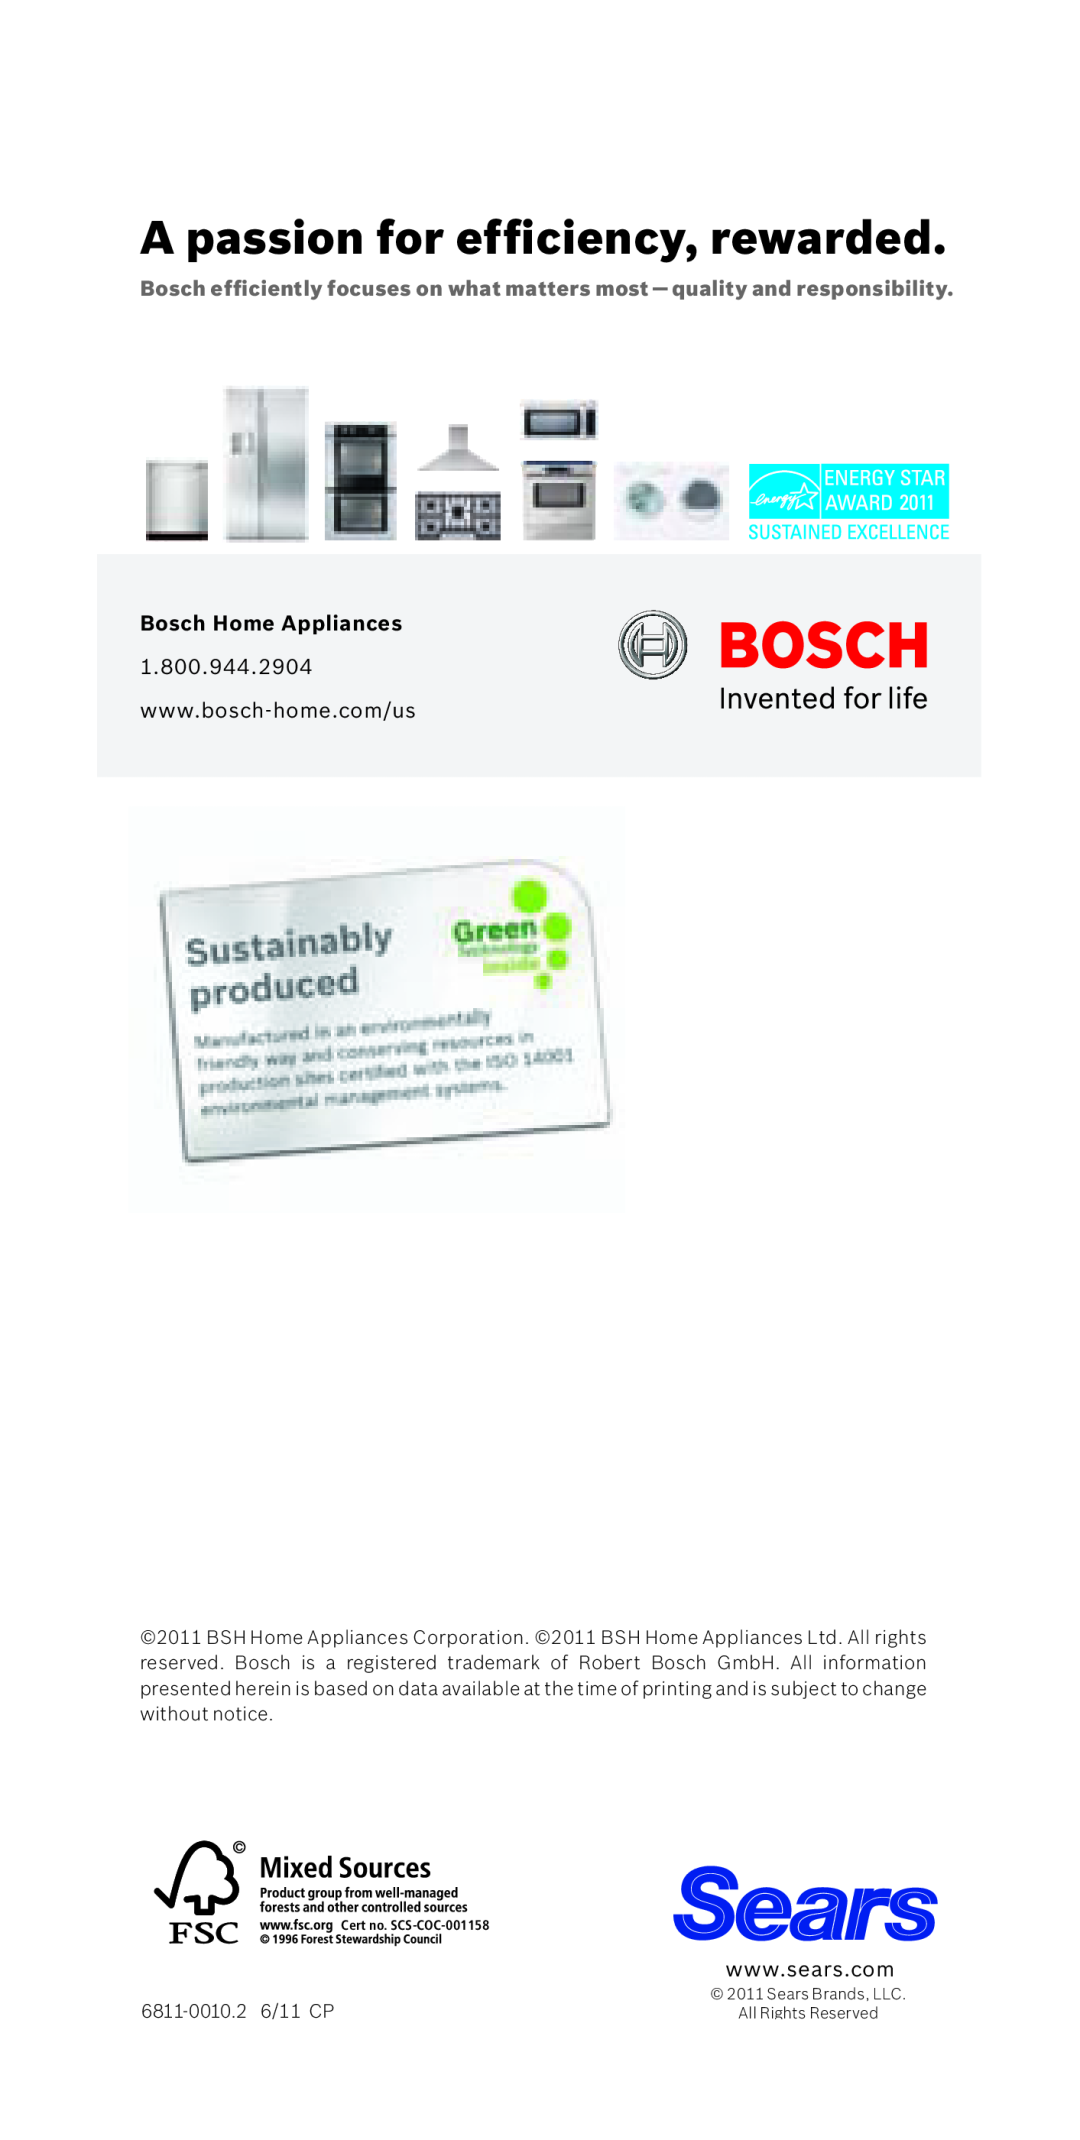 Bosch Appliances 800 Series manual A passion for efficiency, rewarded, Bosch Home Appliances, Certno.. SCS-COC-001158 